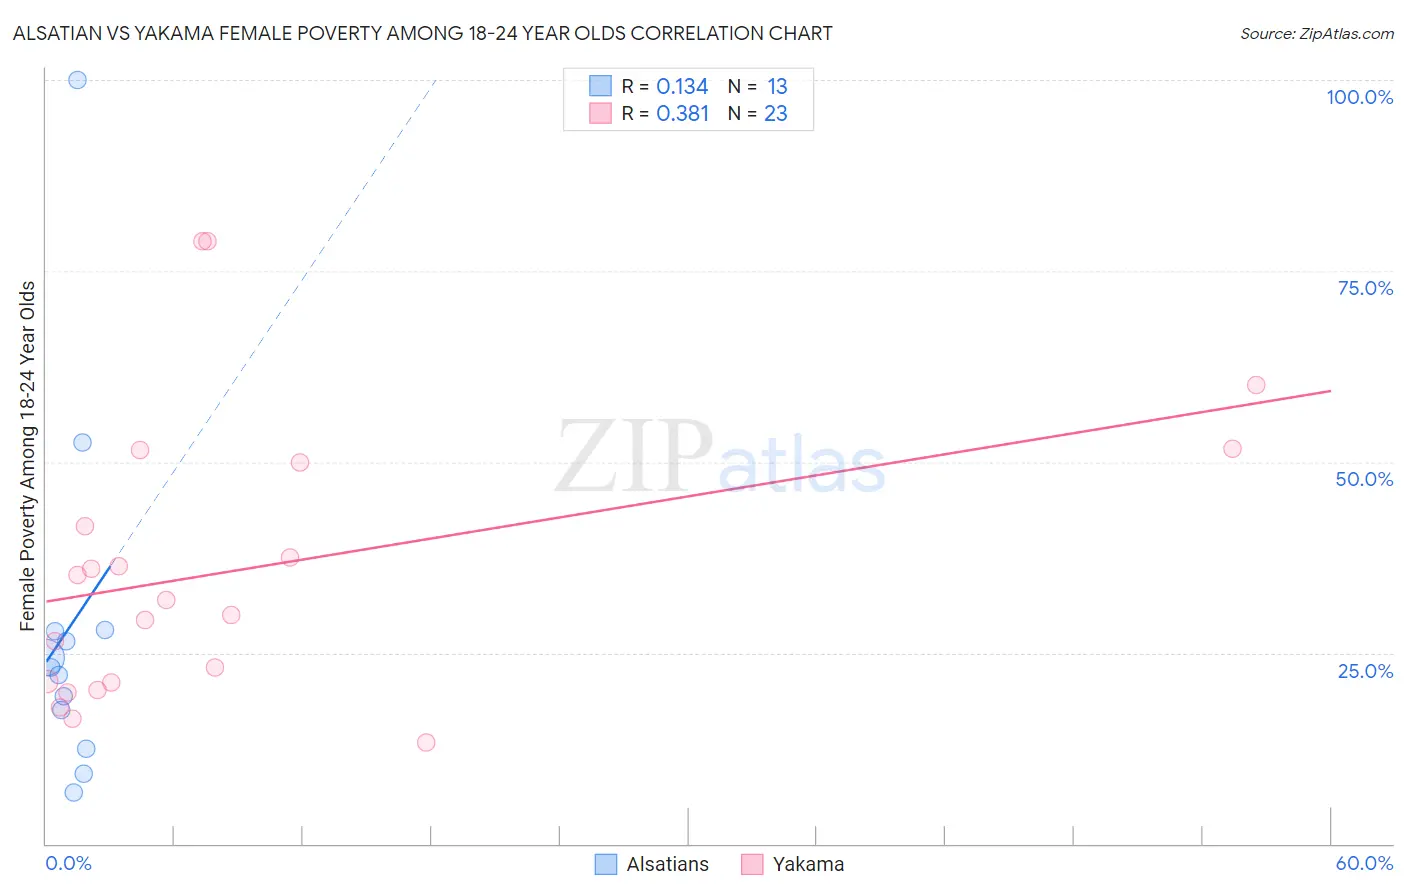 Alsatian vs Yakama Female Poverty Among 18-24 Year Olds